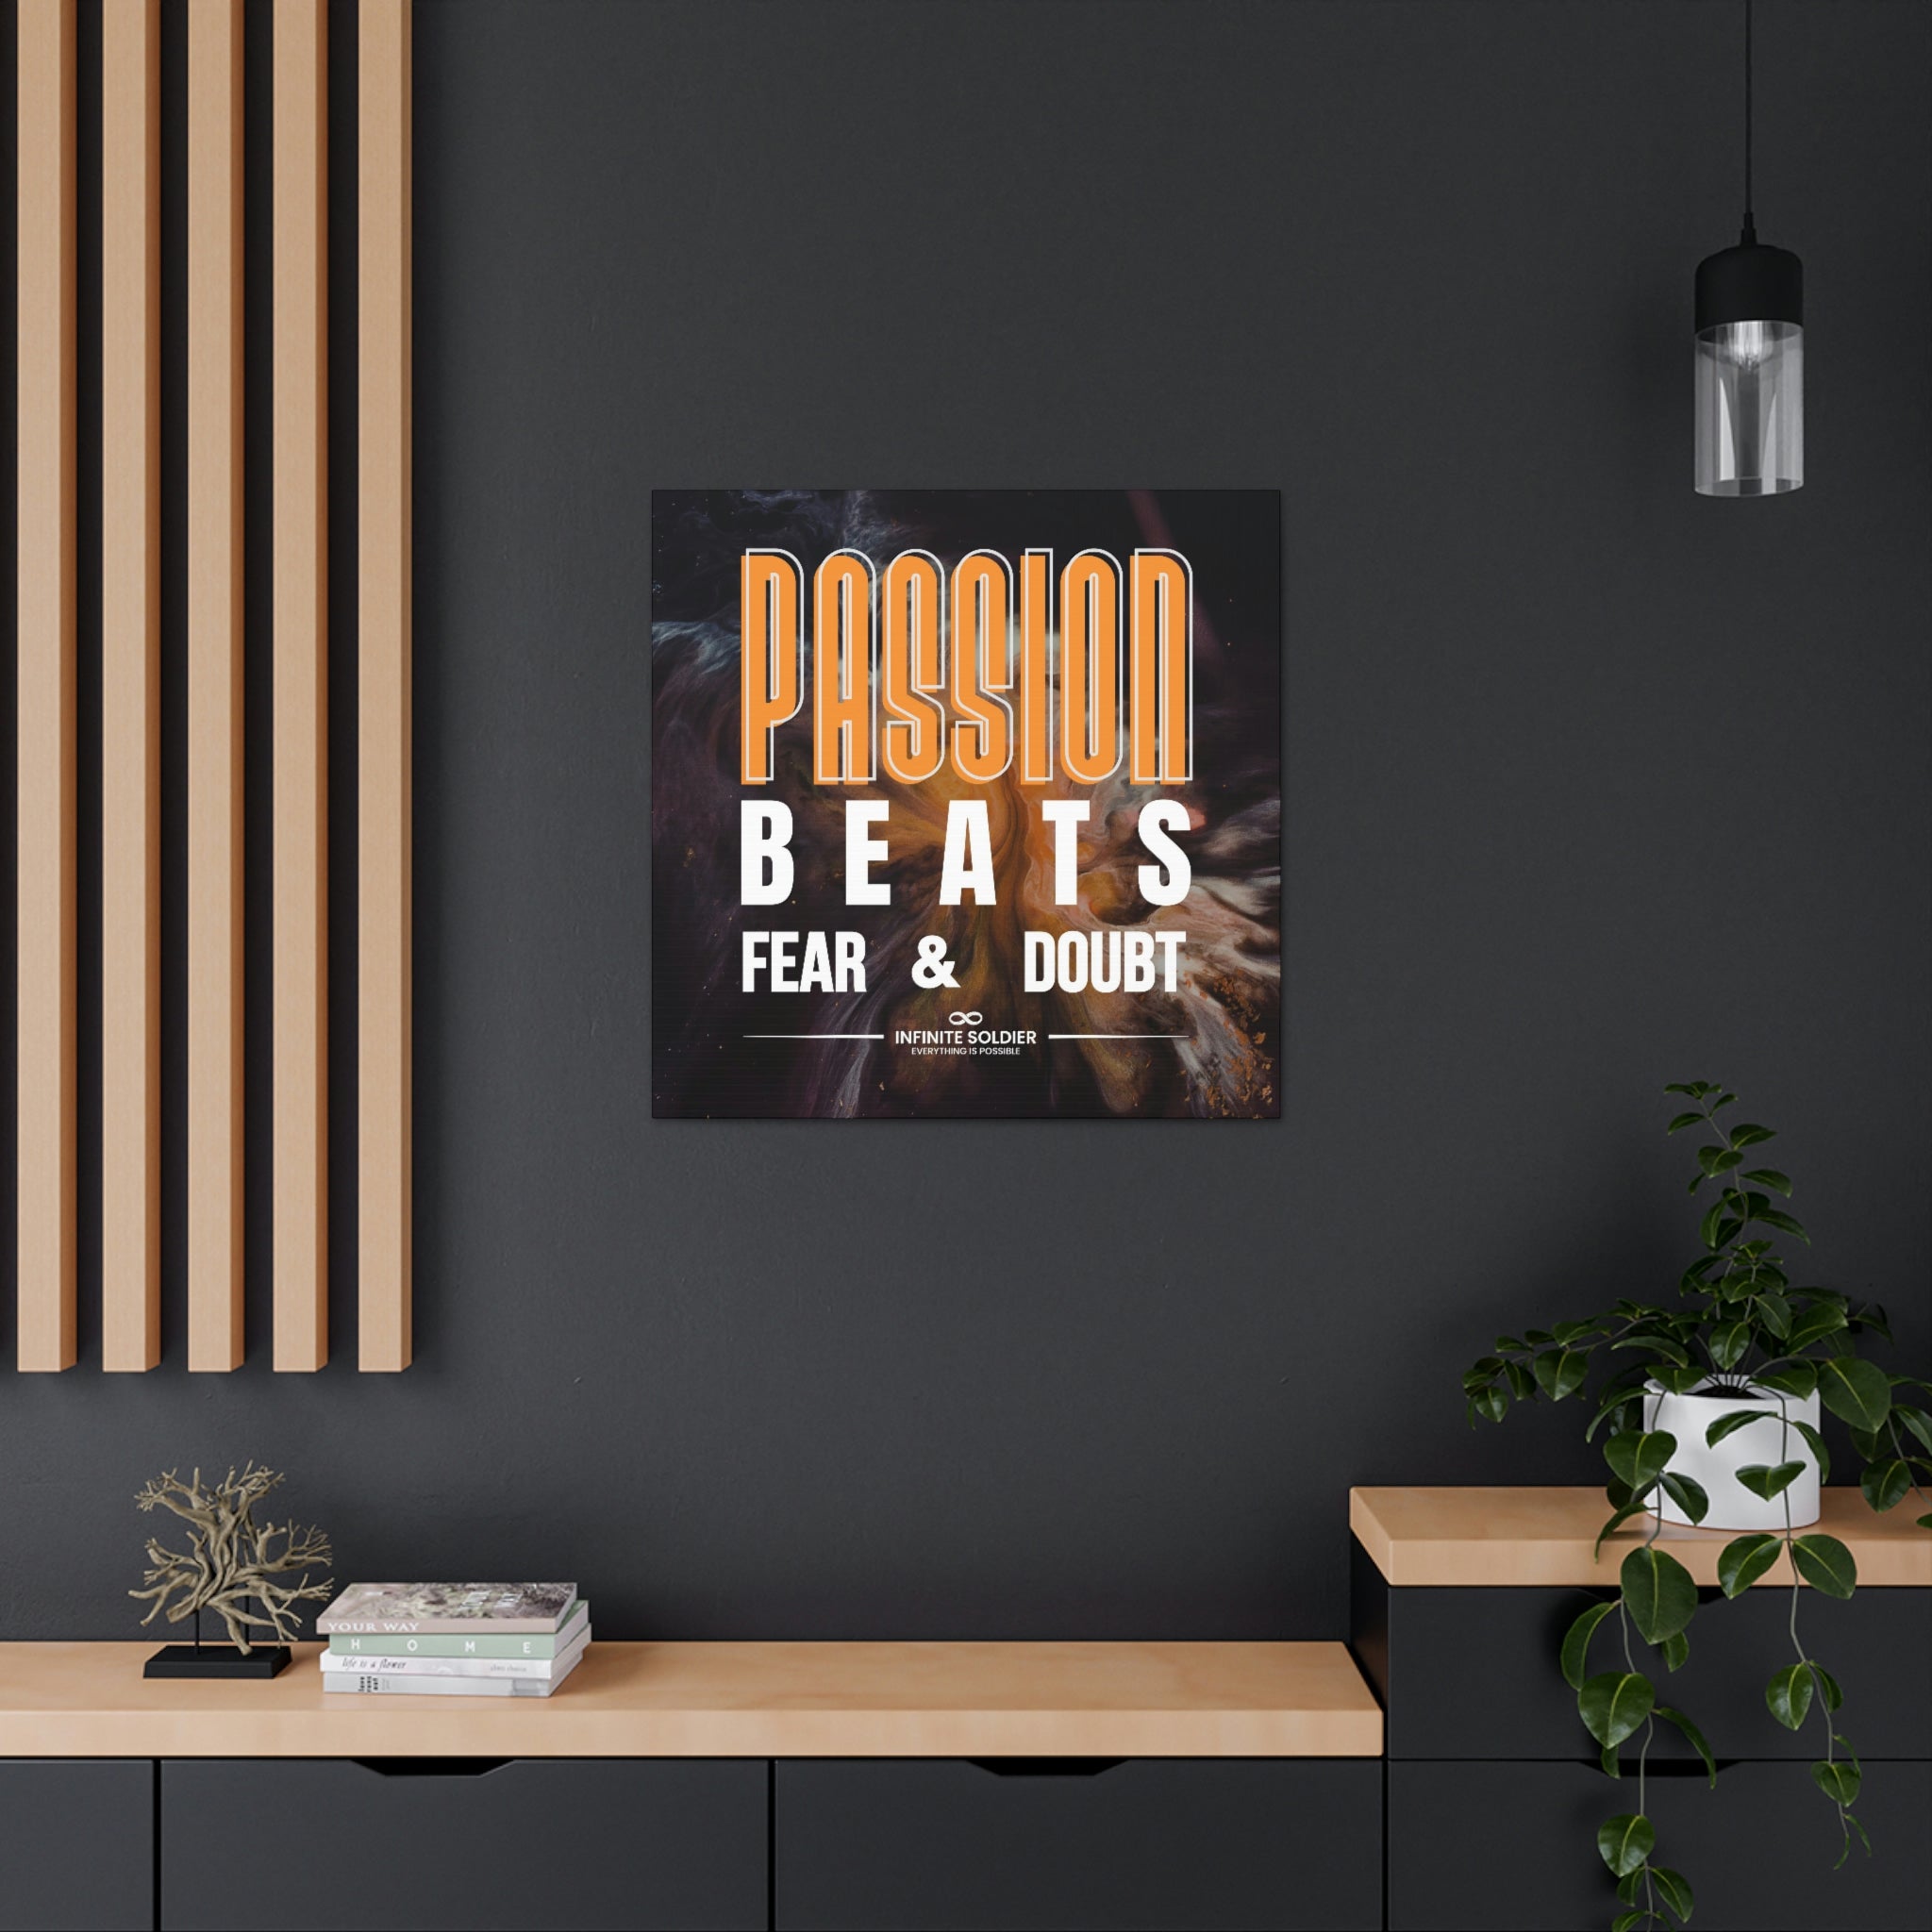 Passion Beats Fear & Doubt Motivational Canvas Poster | Infinite Soldier